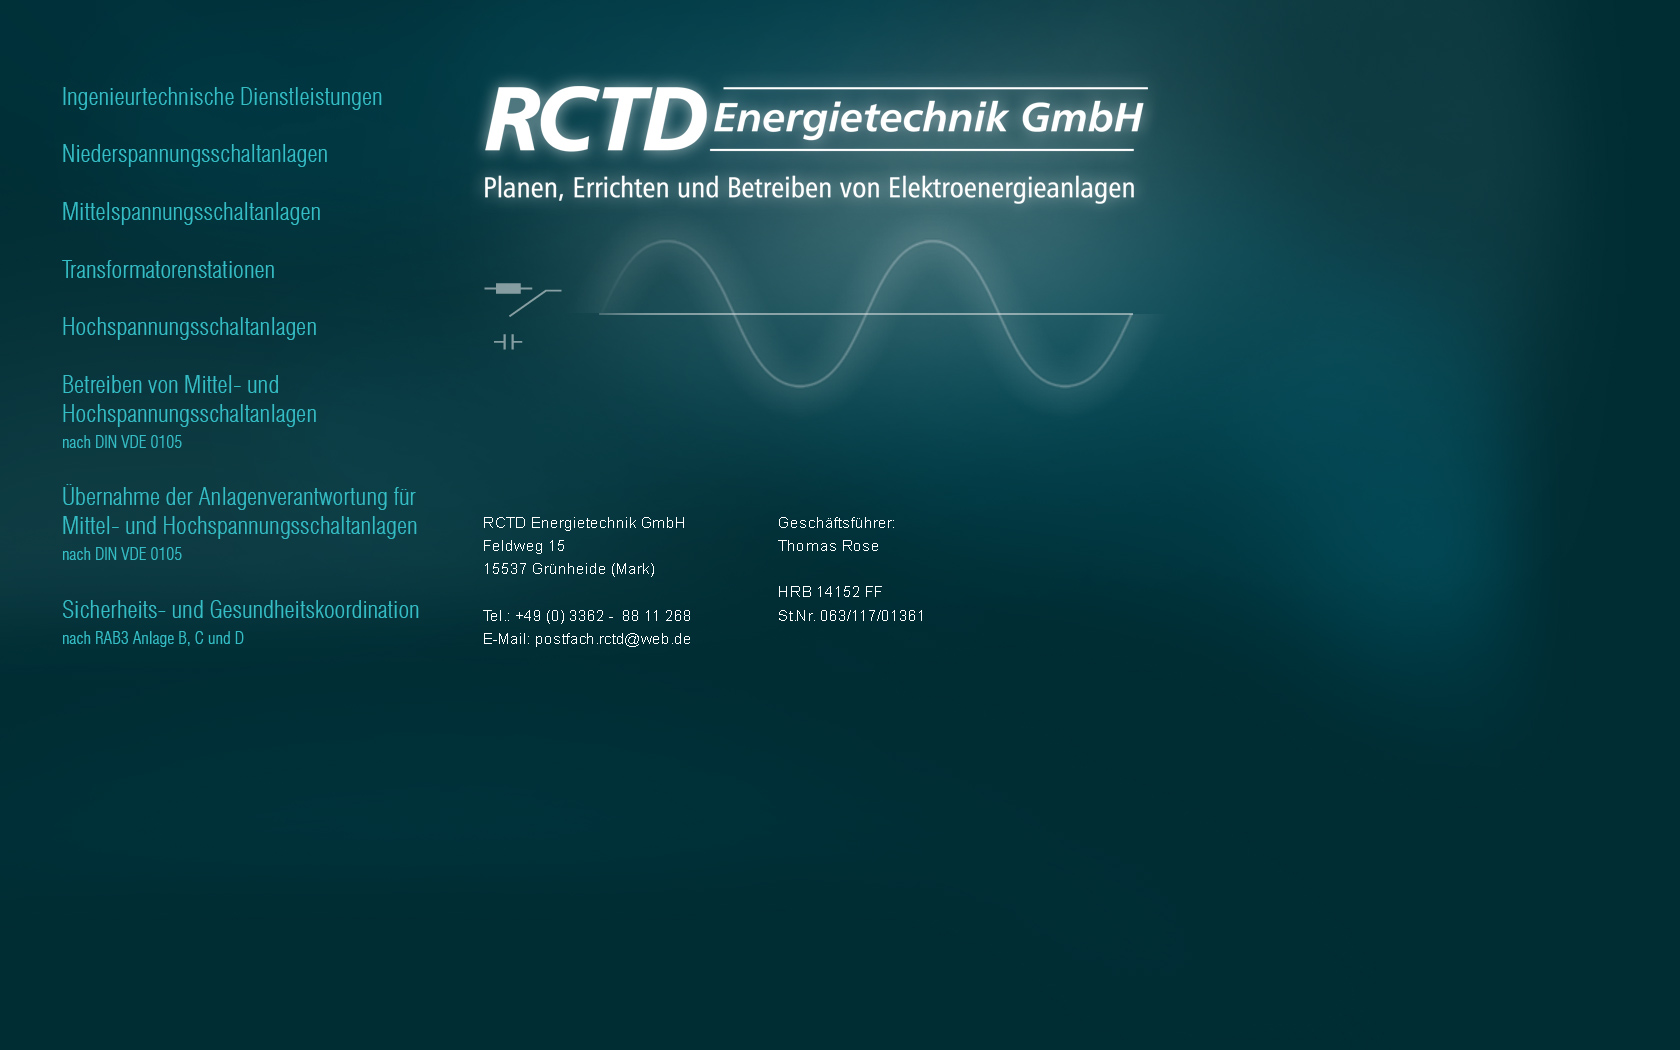 RCTD Energietechnik GmbH